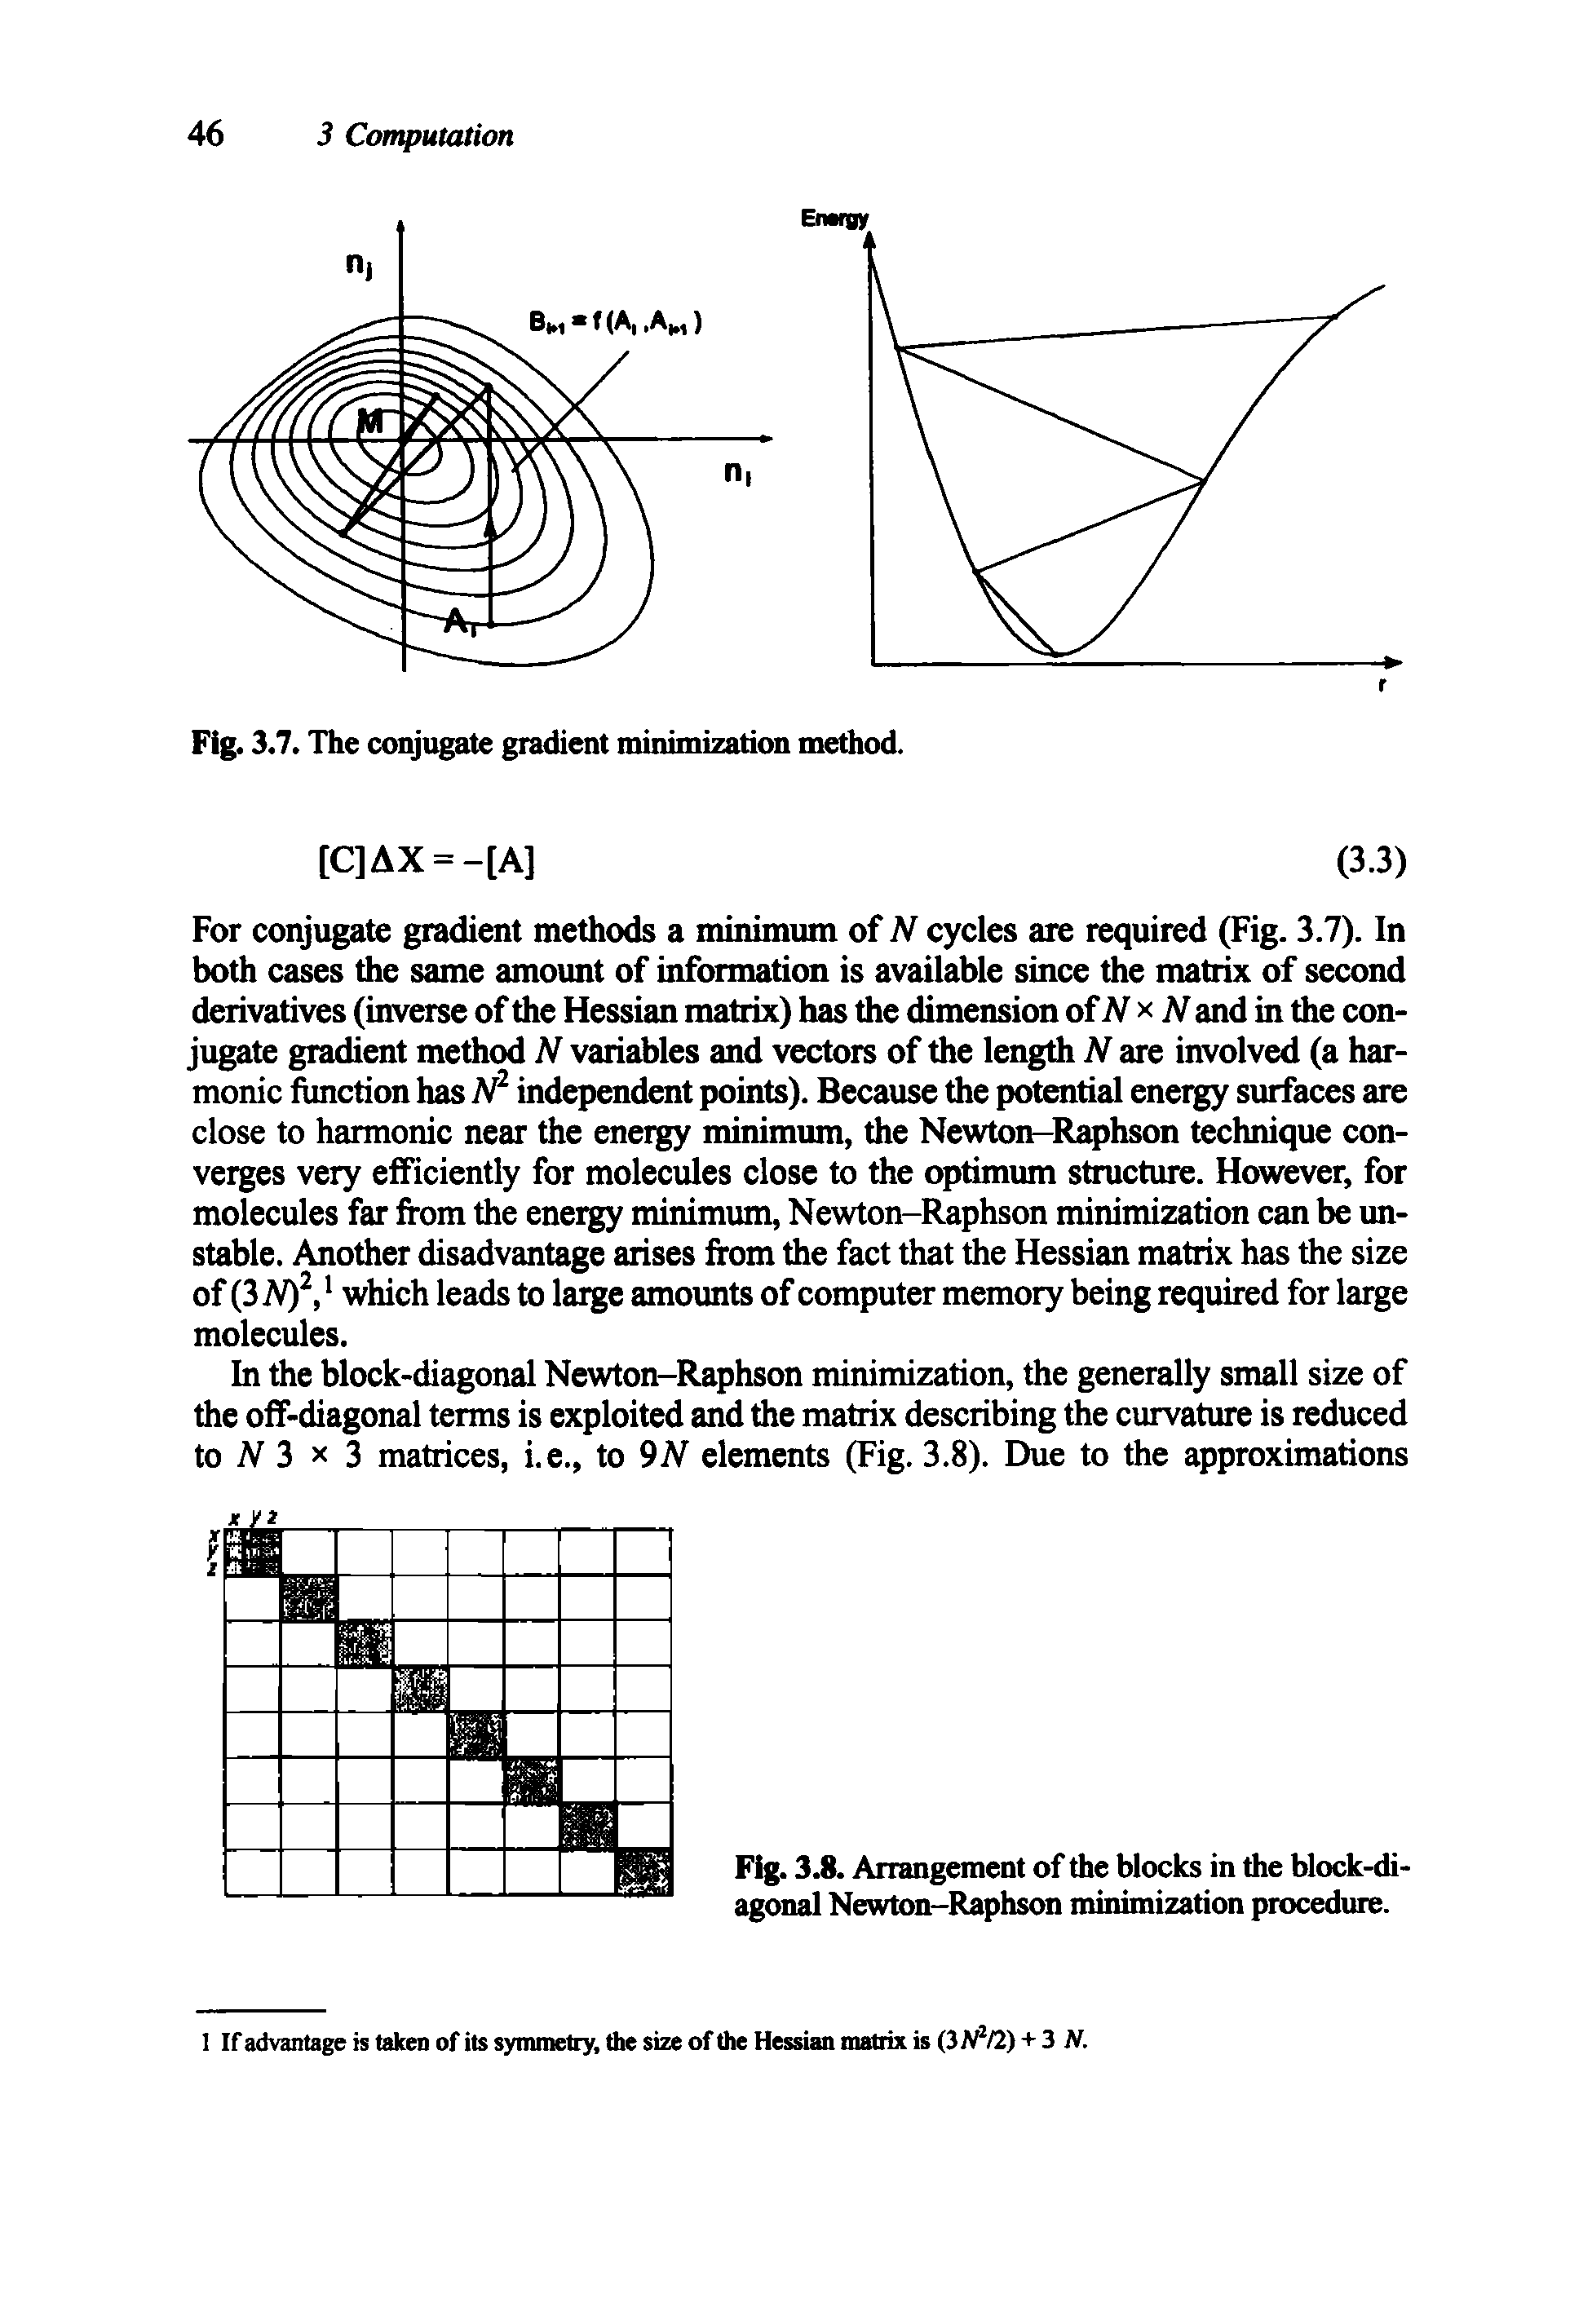 Fig. 3.8. Arrangement of the blocks in the block-diagonal Newton-Raphson minimization procedure.